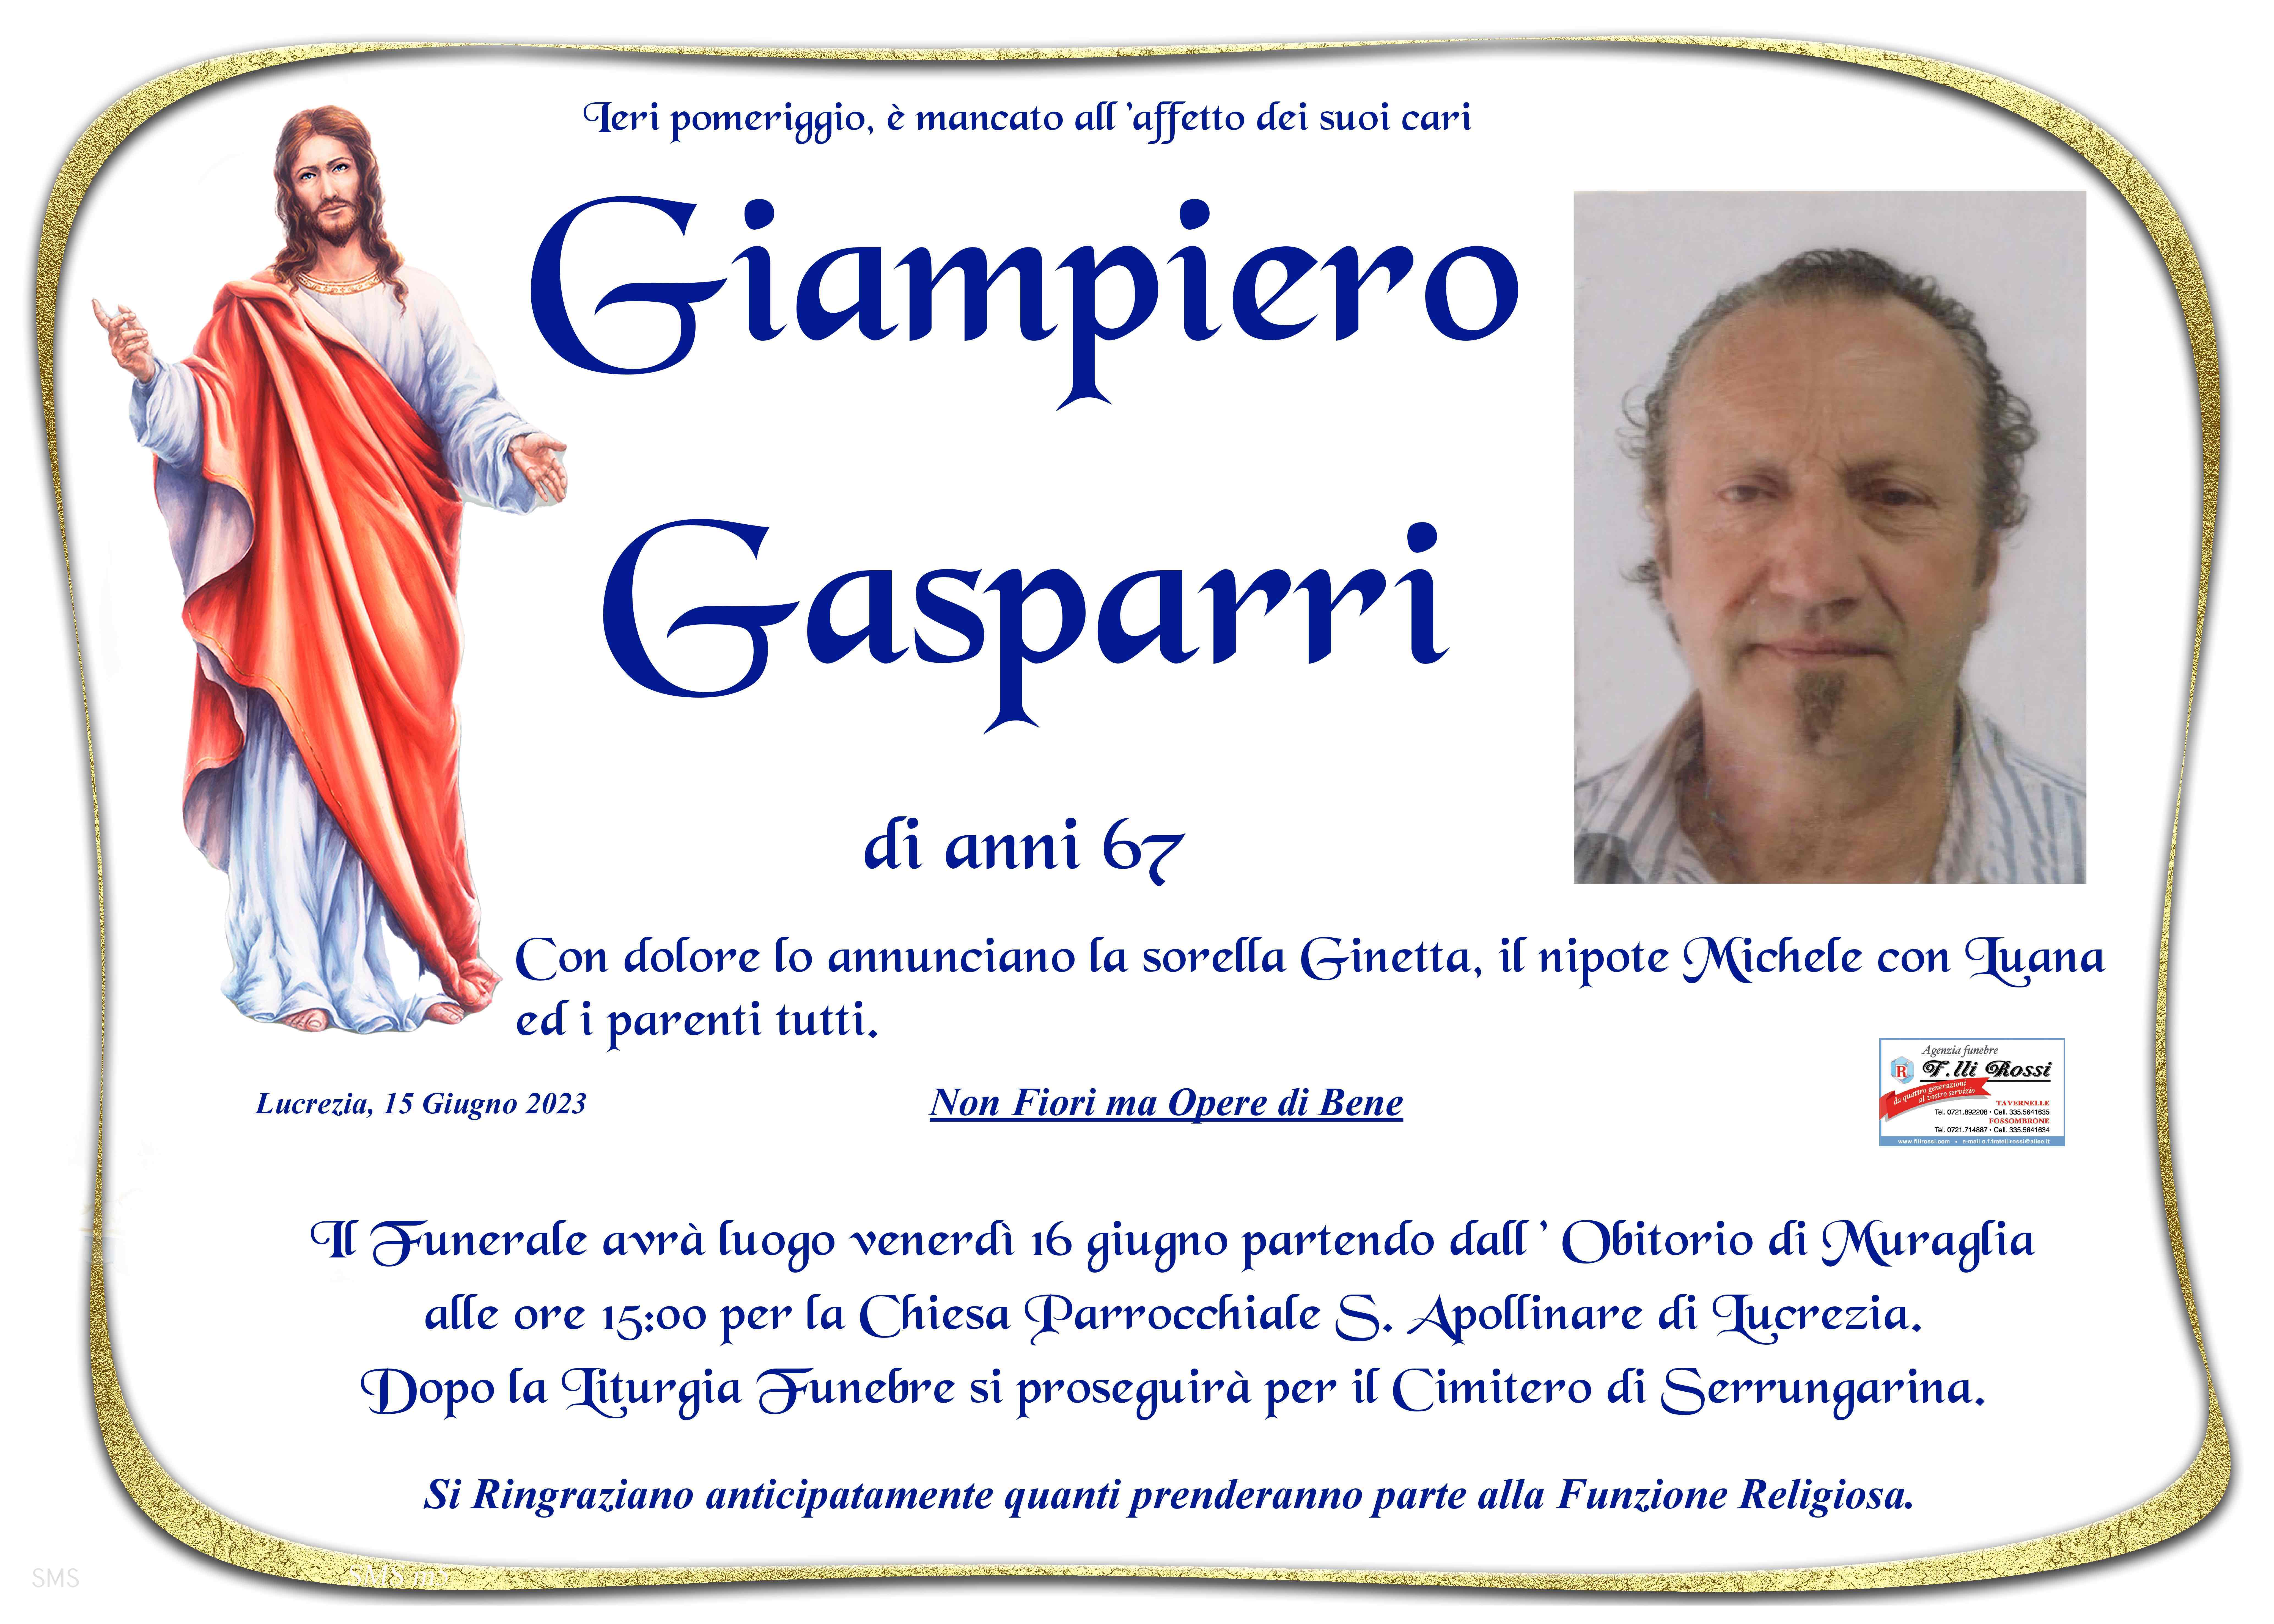 Giampiero Gasparri